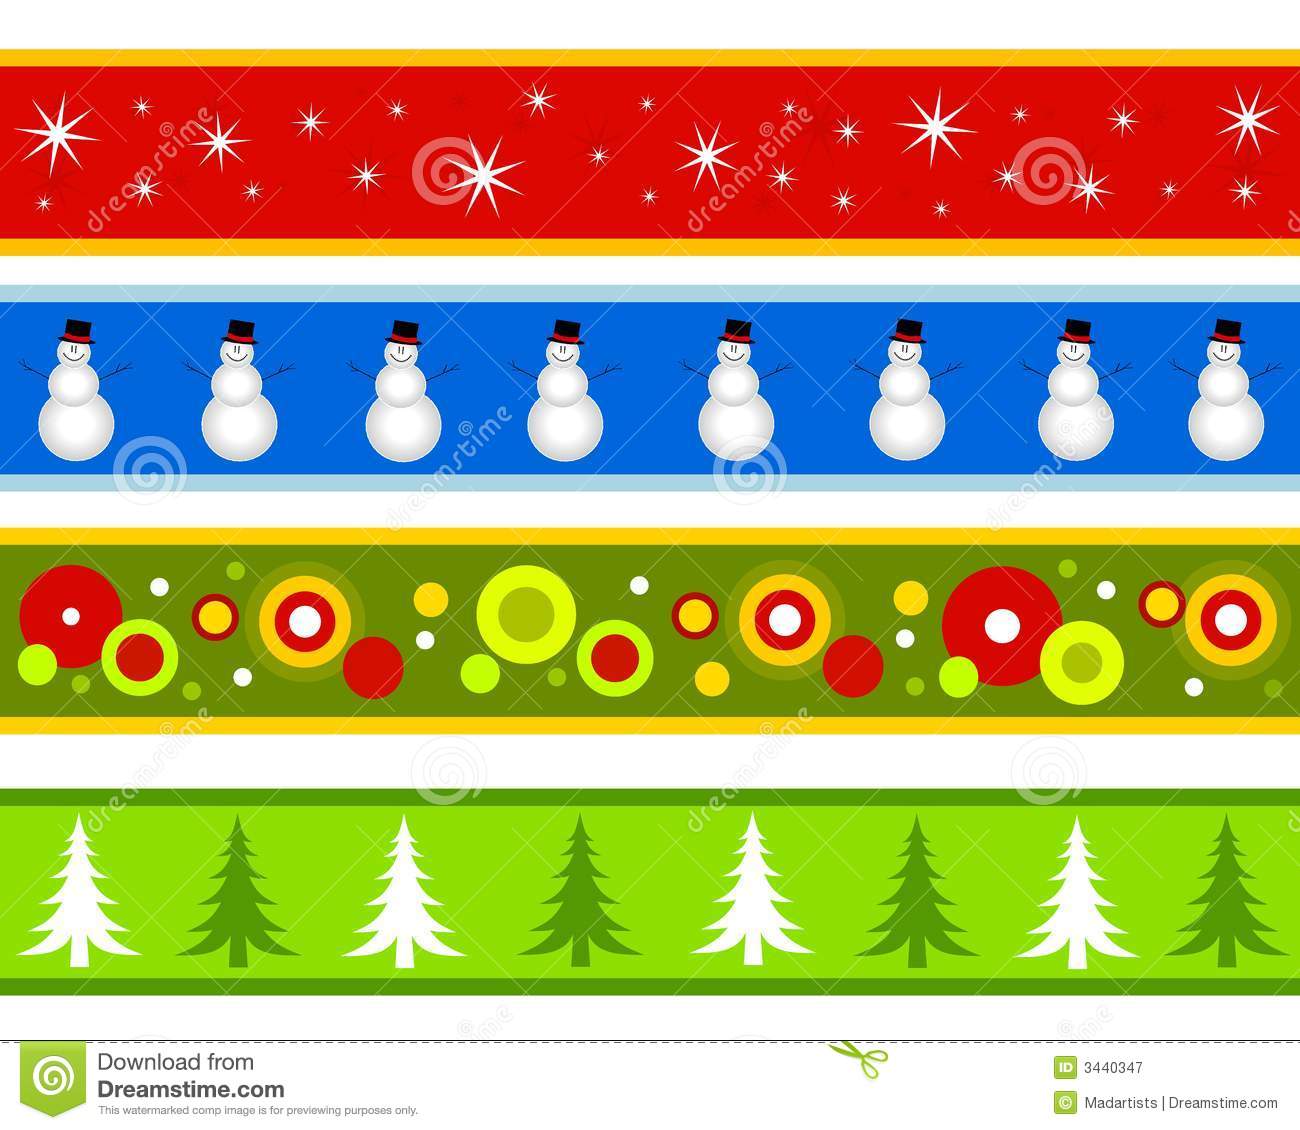 Christmas Borders or Banners  - Christmas Clipart Banners